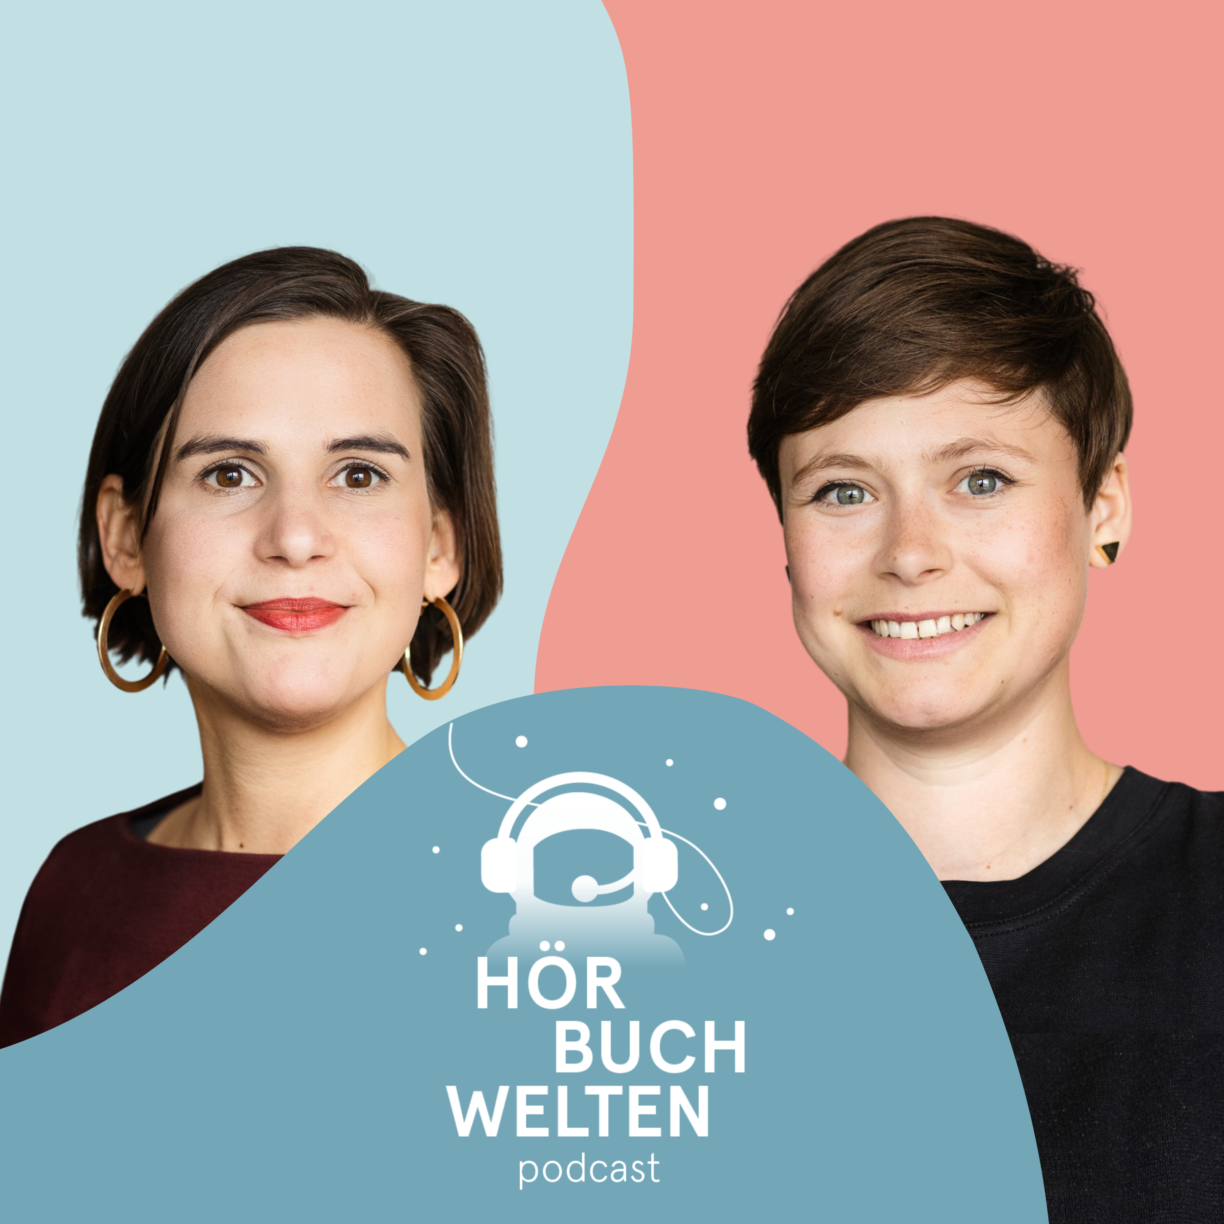 Podcast »Hörbuchwelten« mit Johanna Cantzler & Felicitas Boos (Bookwire)